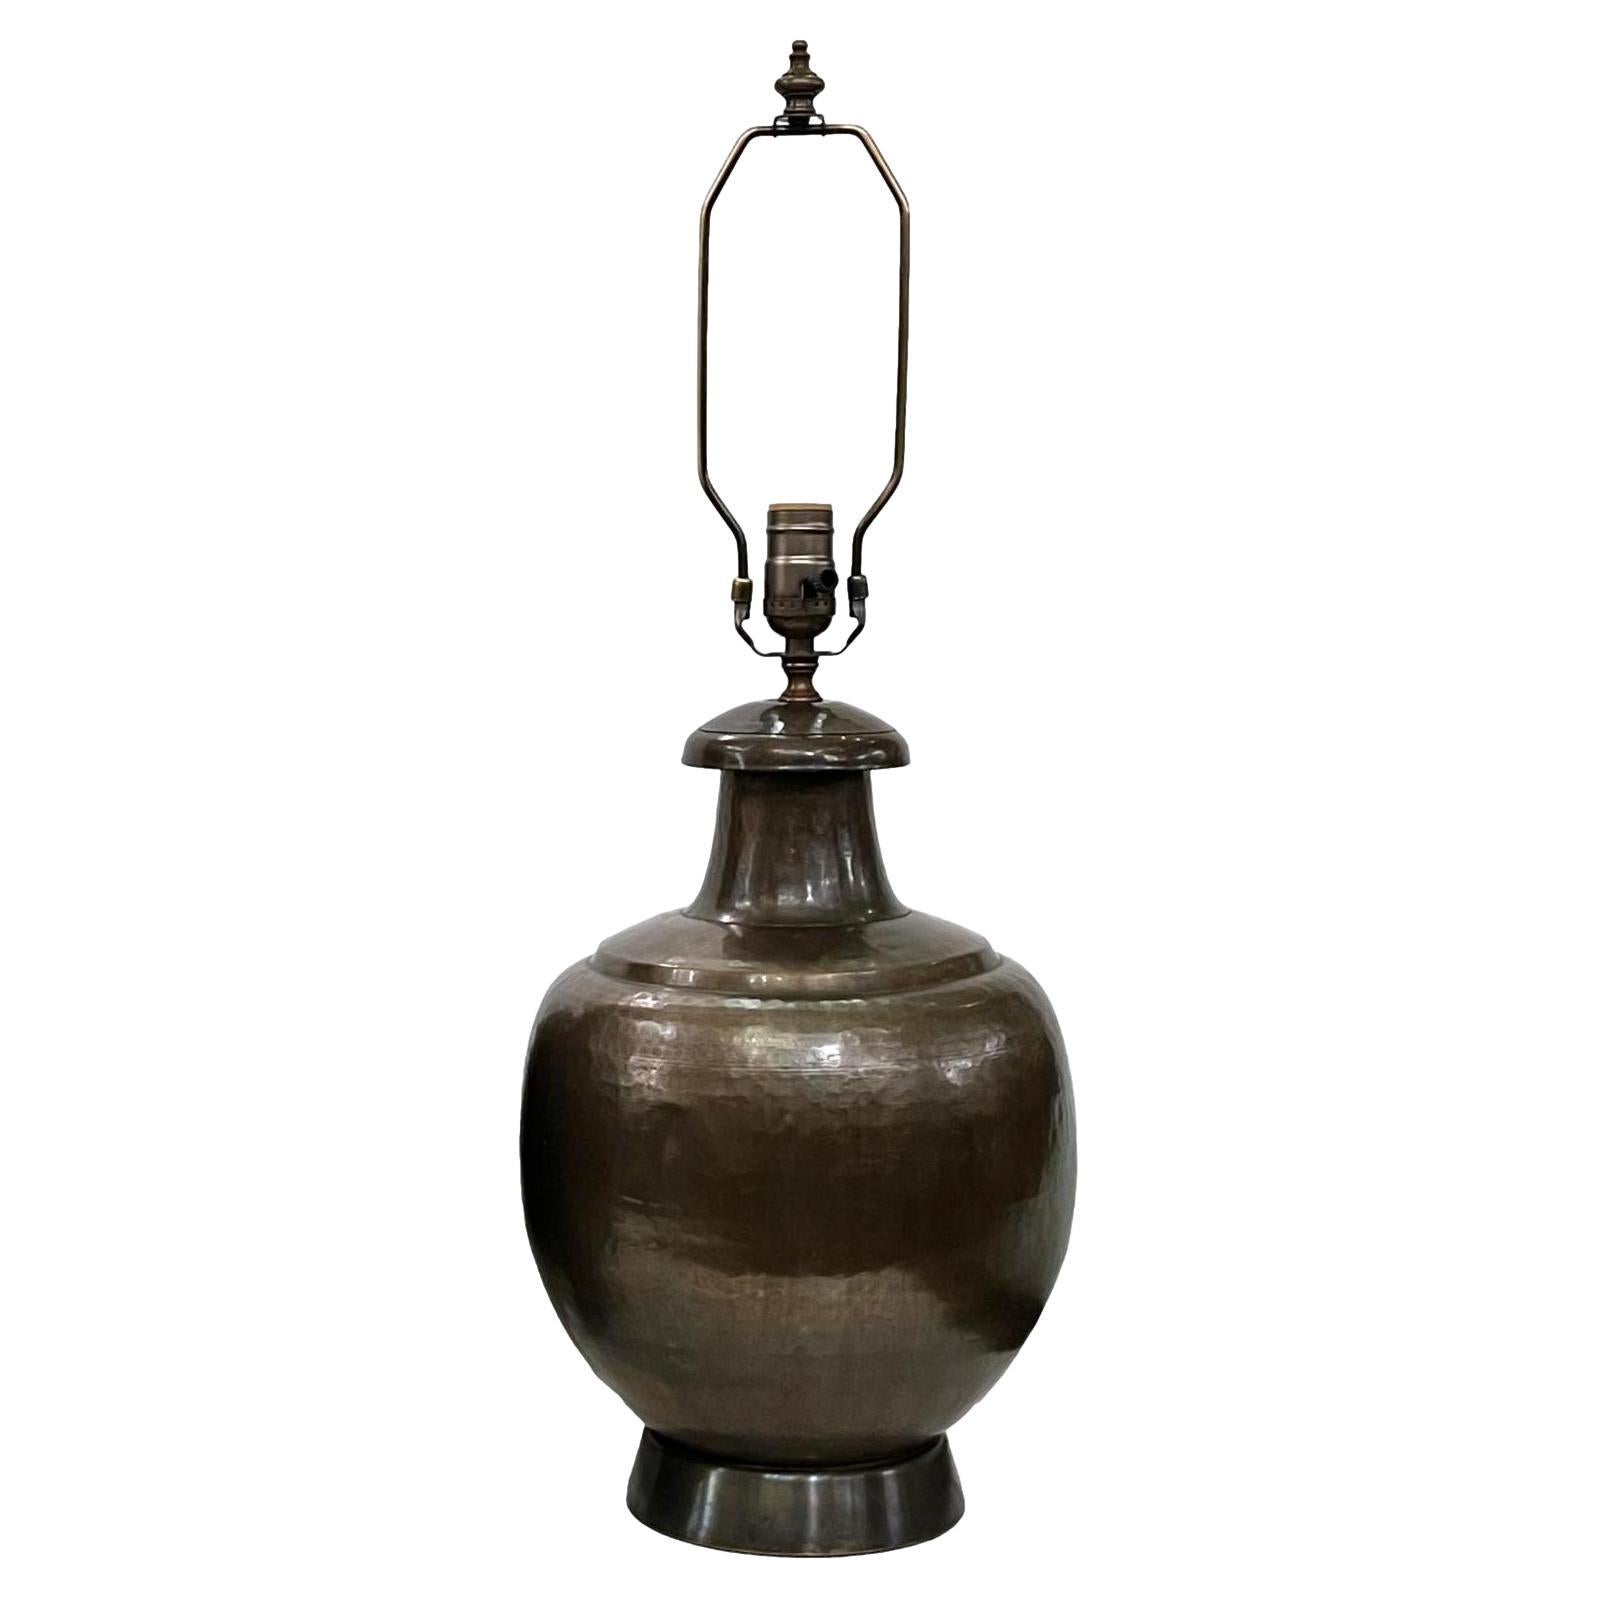 Vintage Hammered Brass Table Lamp